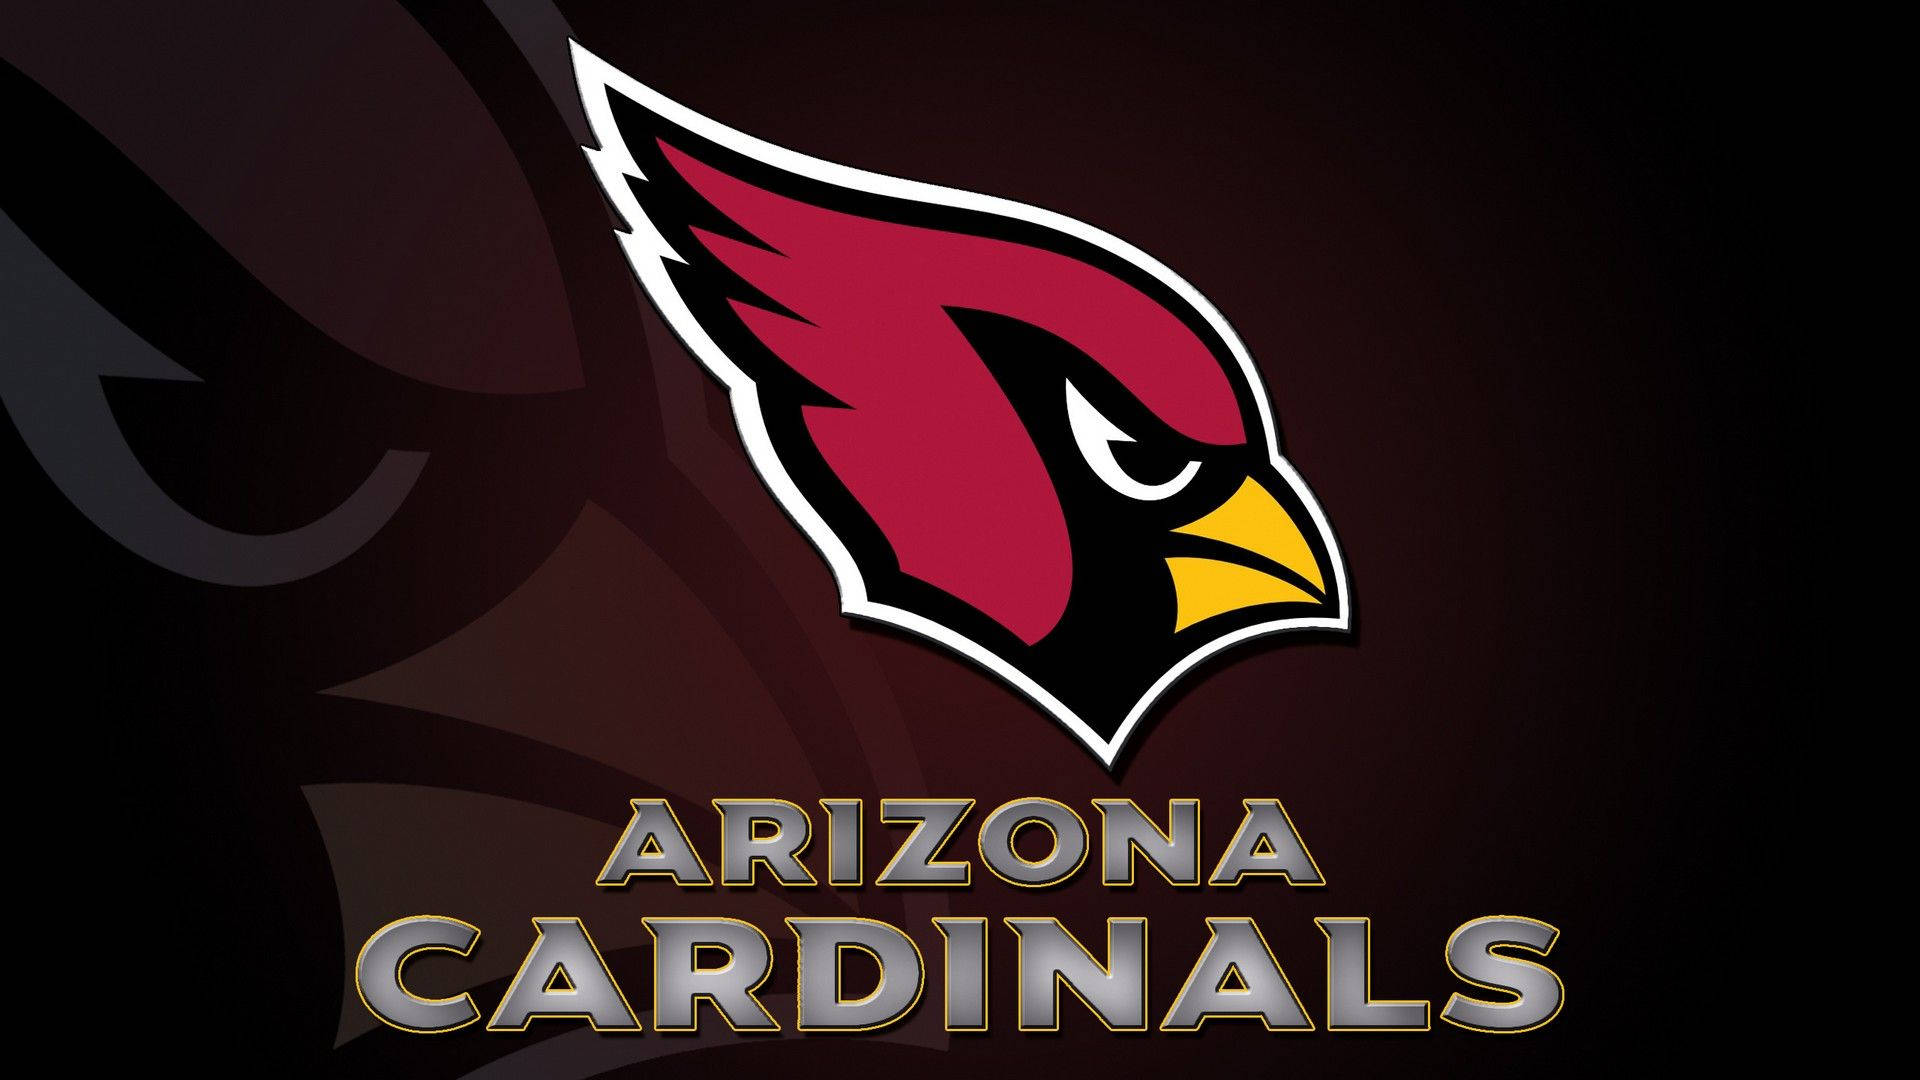 Arizona St Louis Cardinals Background